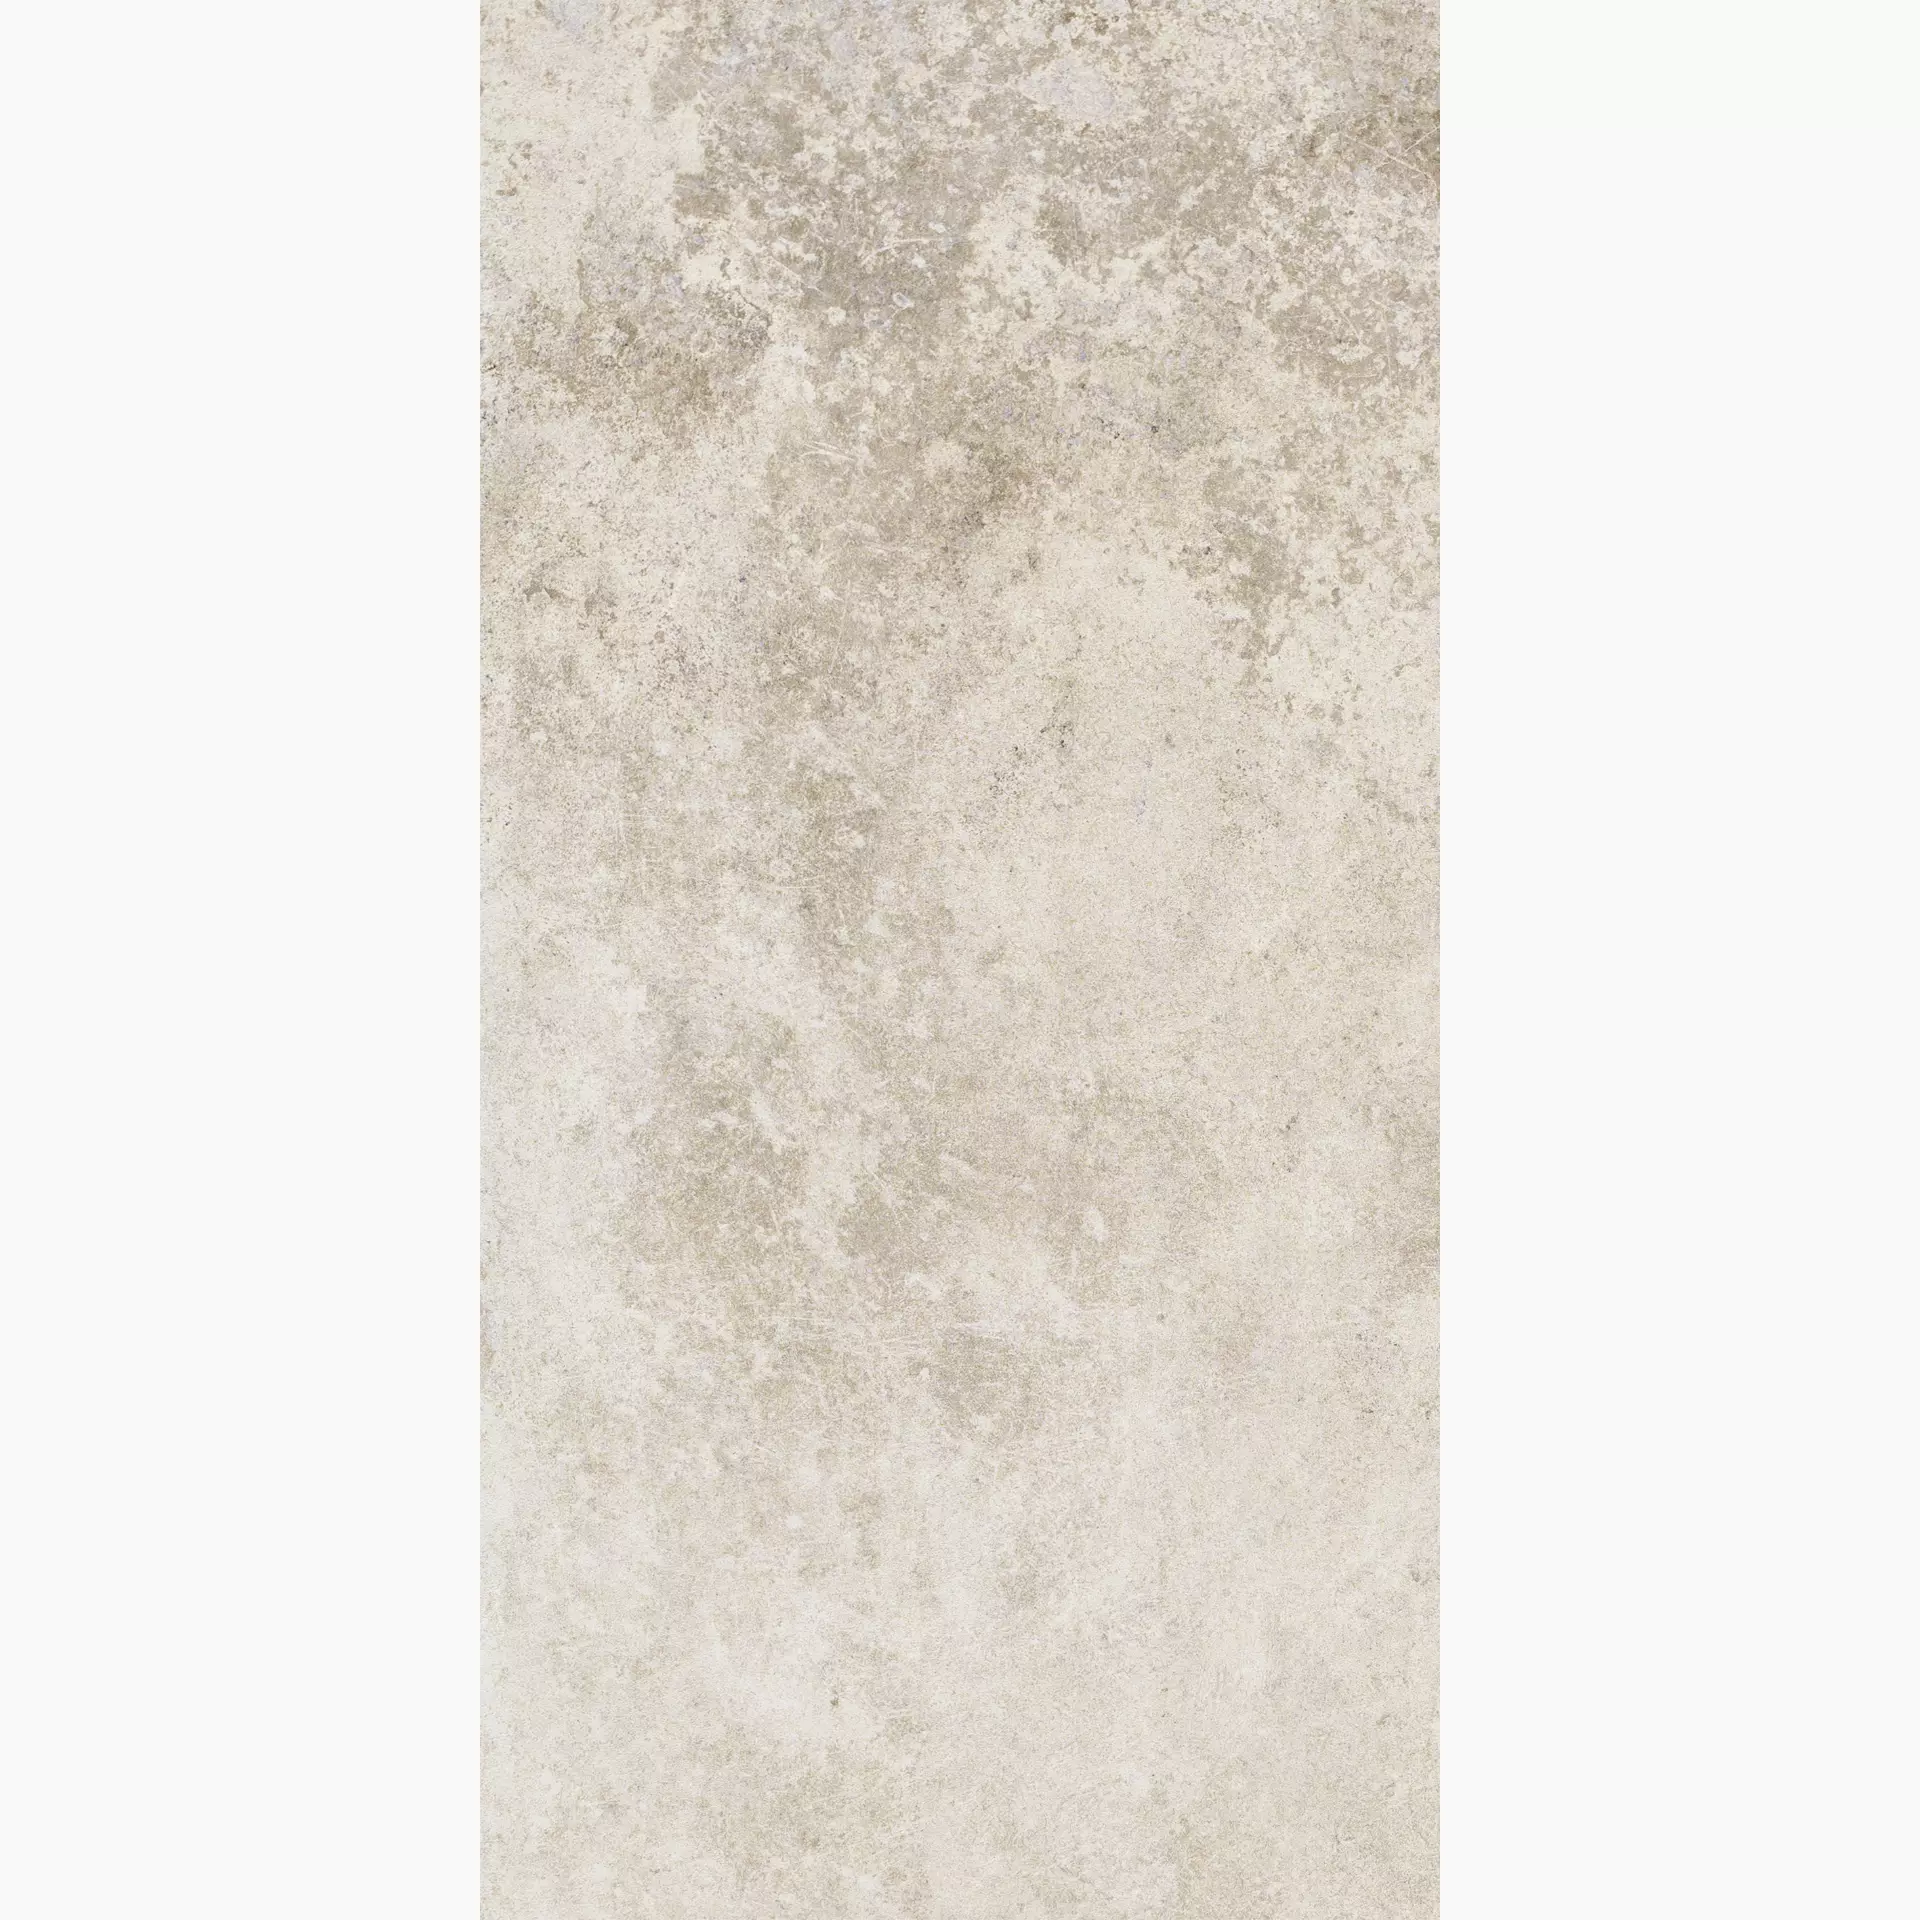 Florim Artifact Of Cerim Aged White Naturale – Matt 760603 60x120cm rectified 9mm